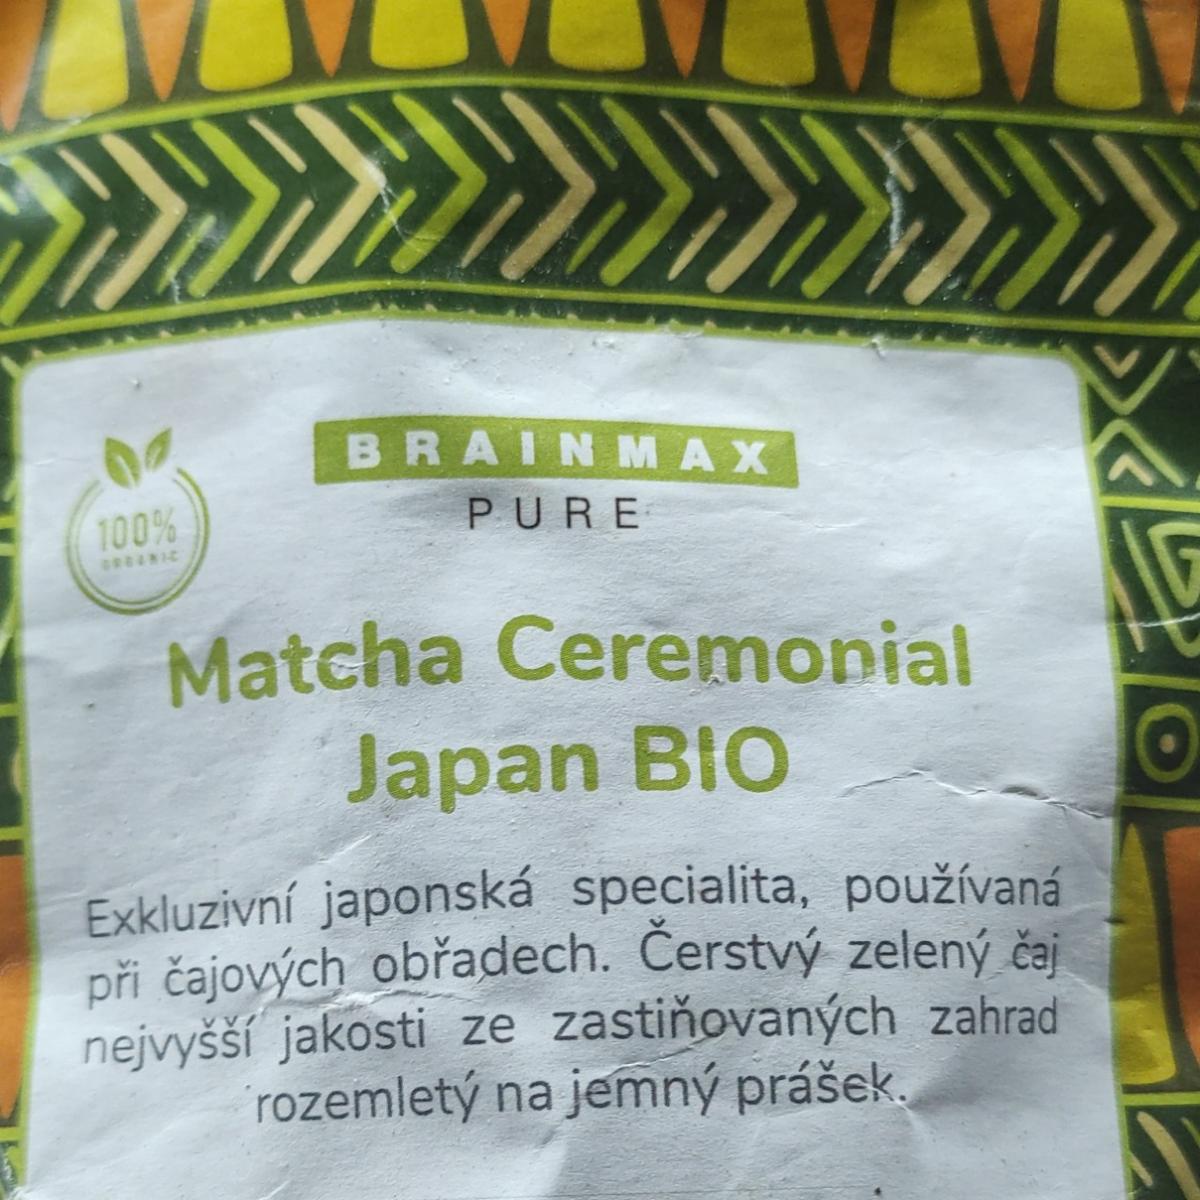 Fotografie - Matcha Ceremonial Japan Bio Brainmax Pure